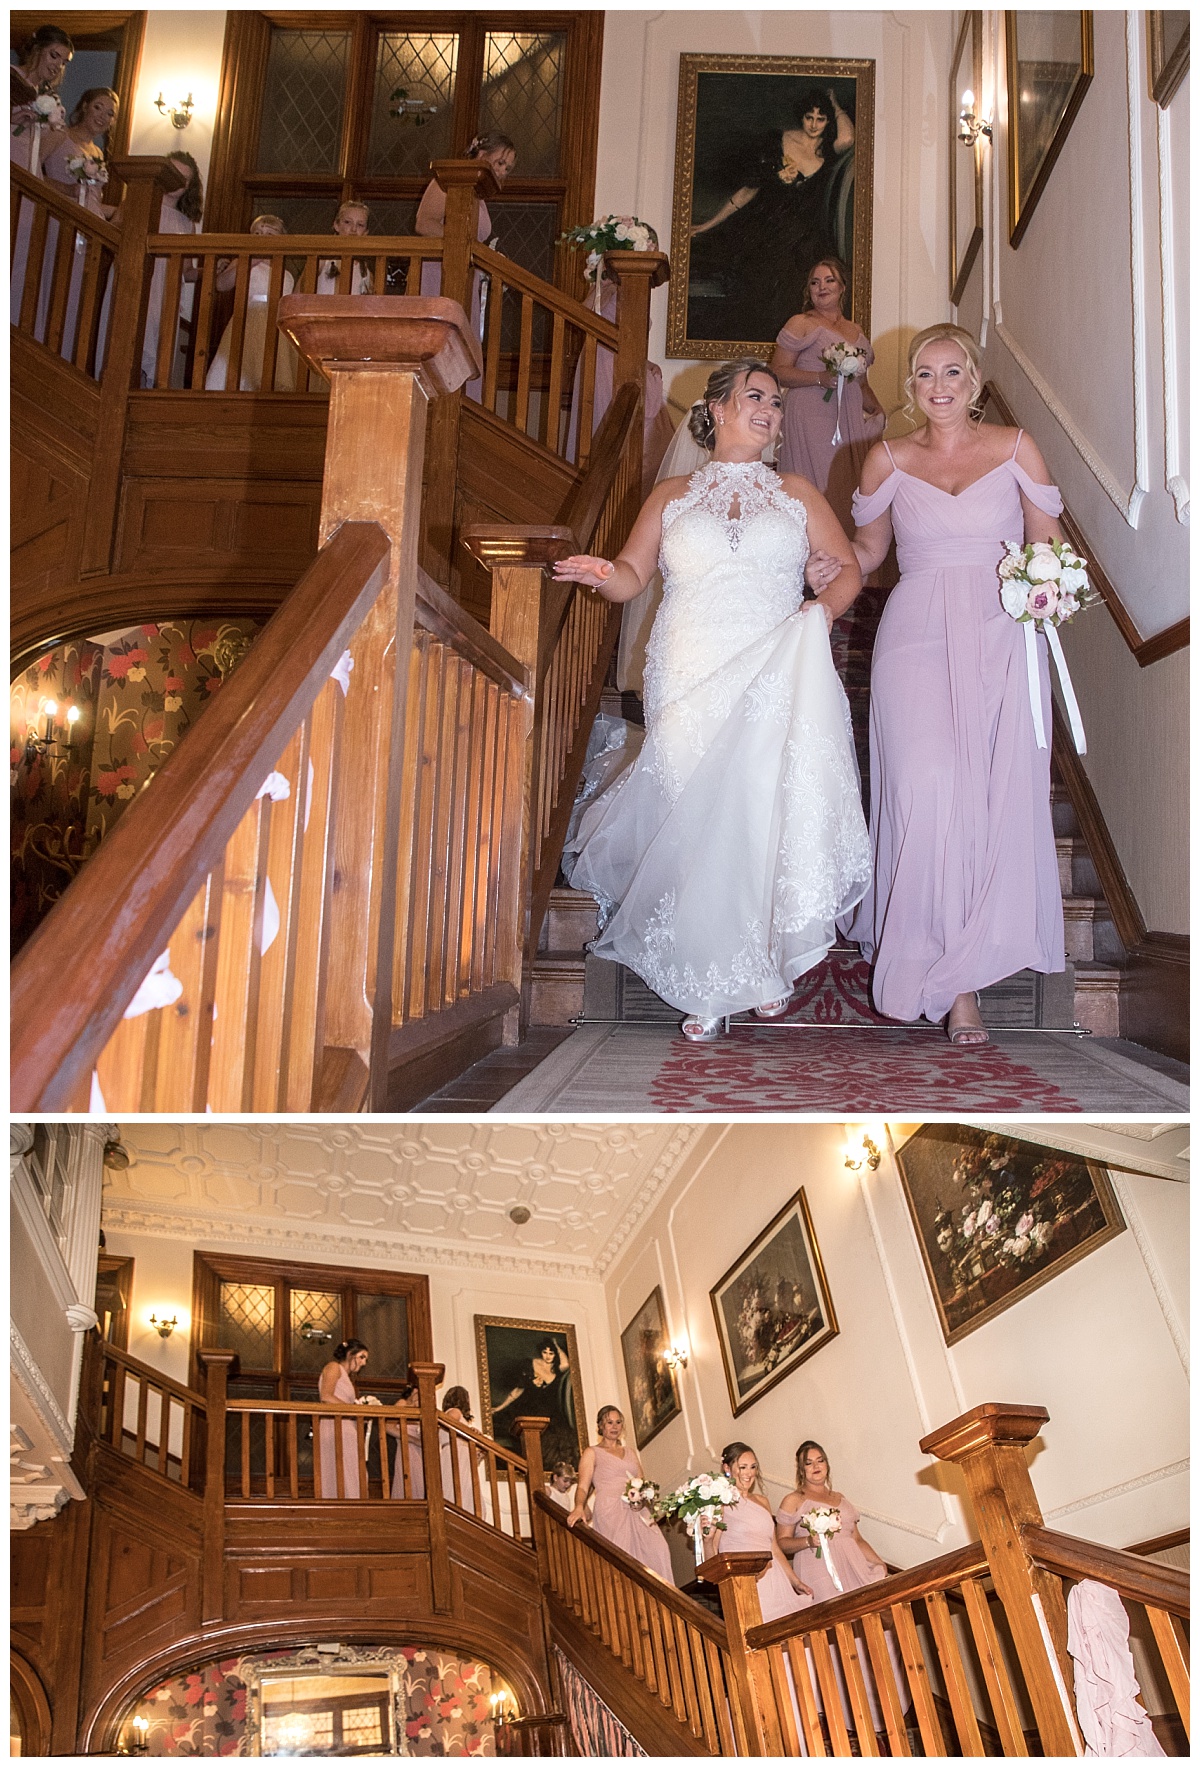 Wedding Photography Manchester - Nicky and Nichola's Nunsmere Hall Wedding Day 29